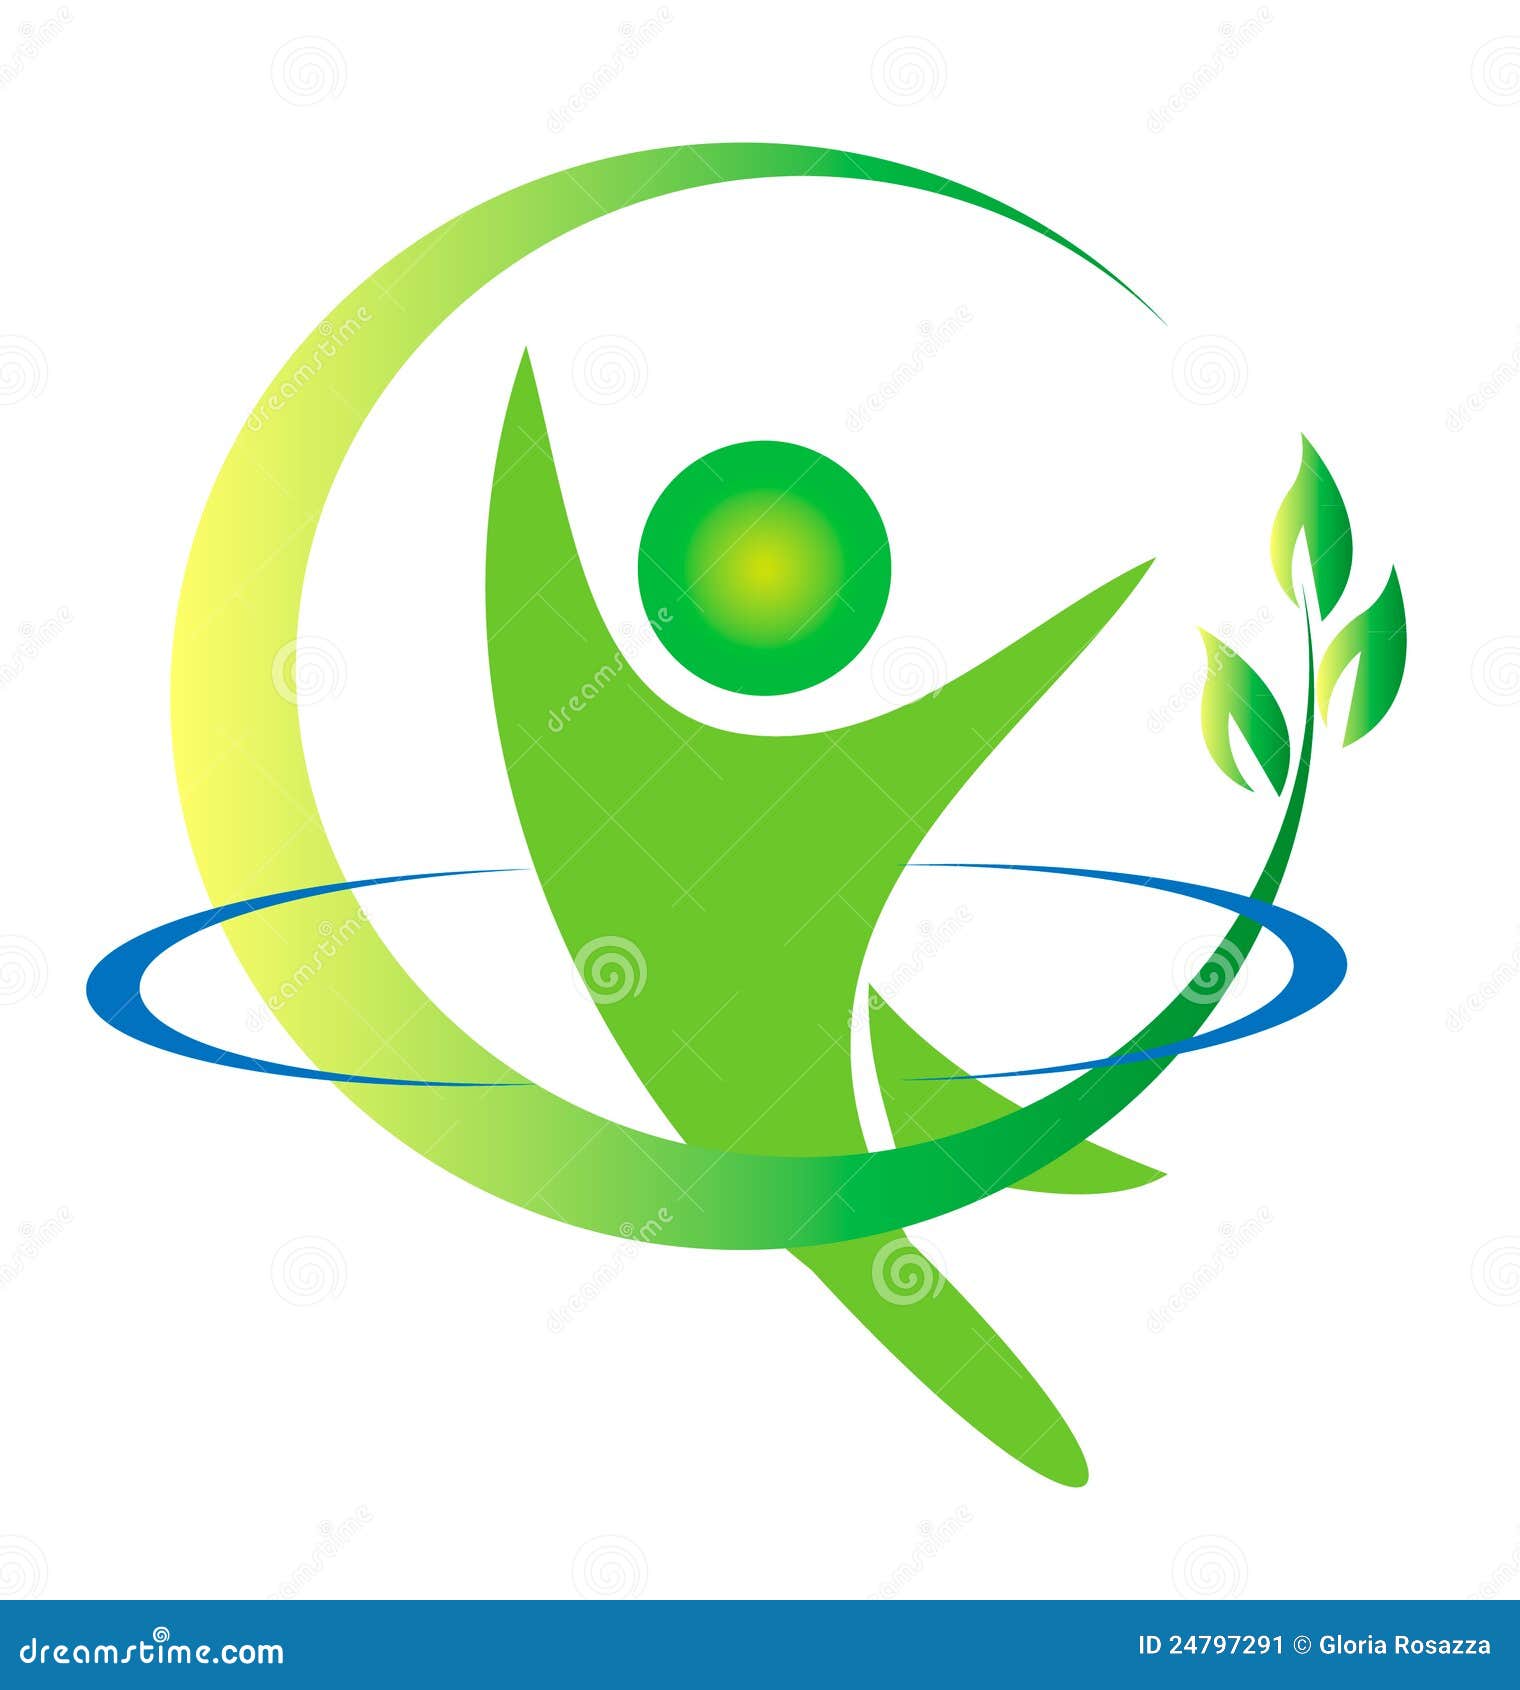 Health nature logo stock vector. Illustration of figure - 24797291